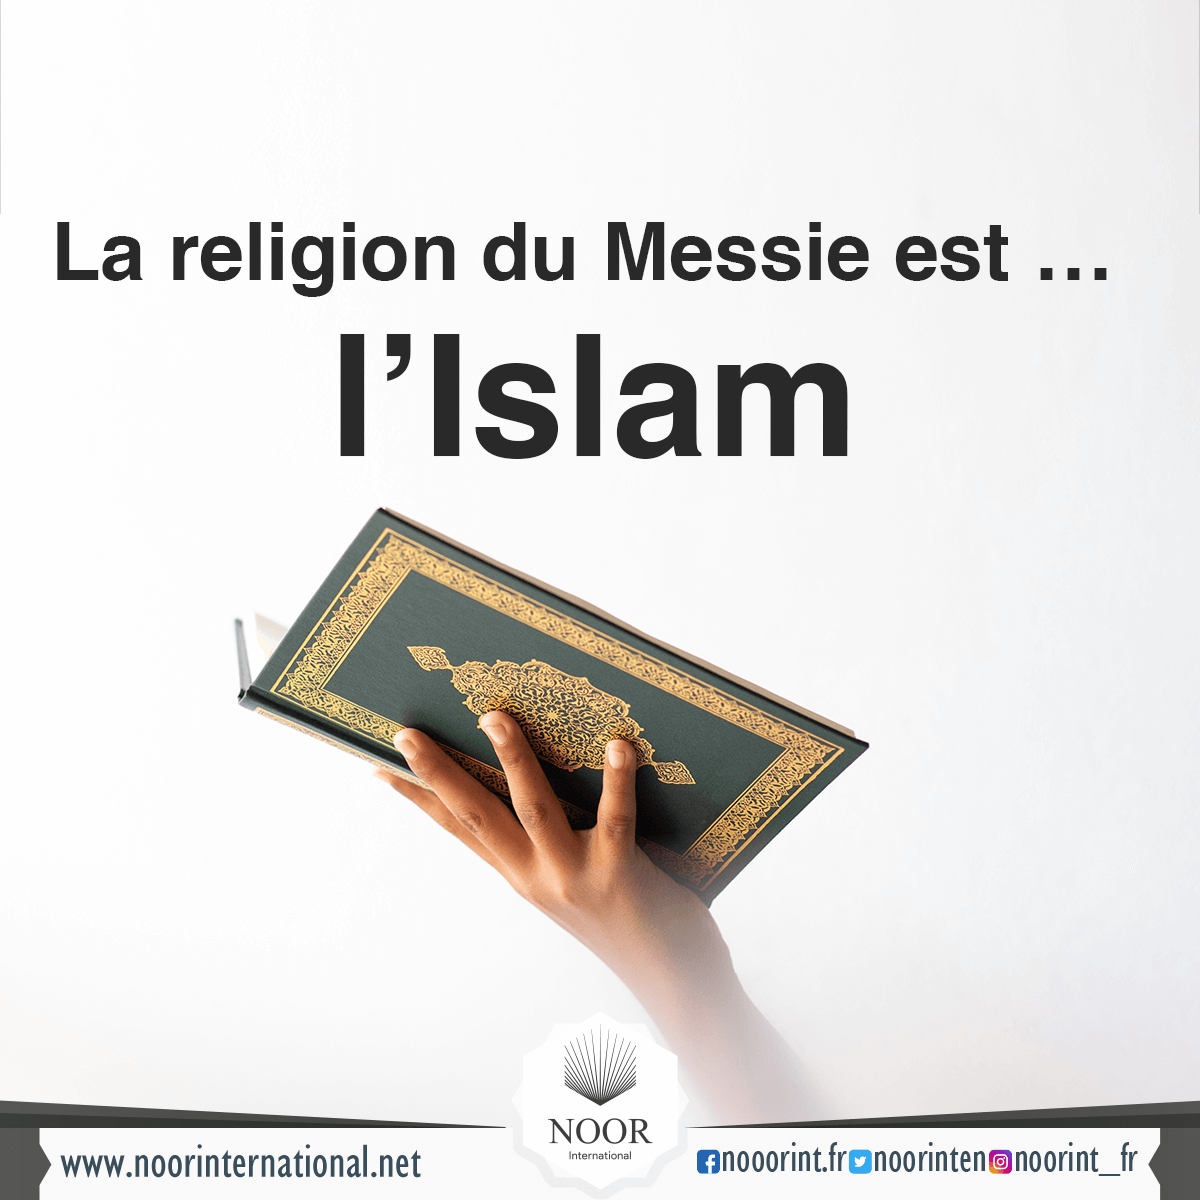 La religion du Messie est … l’Islam